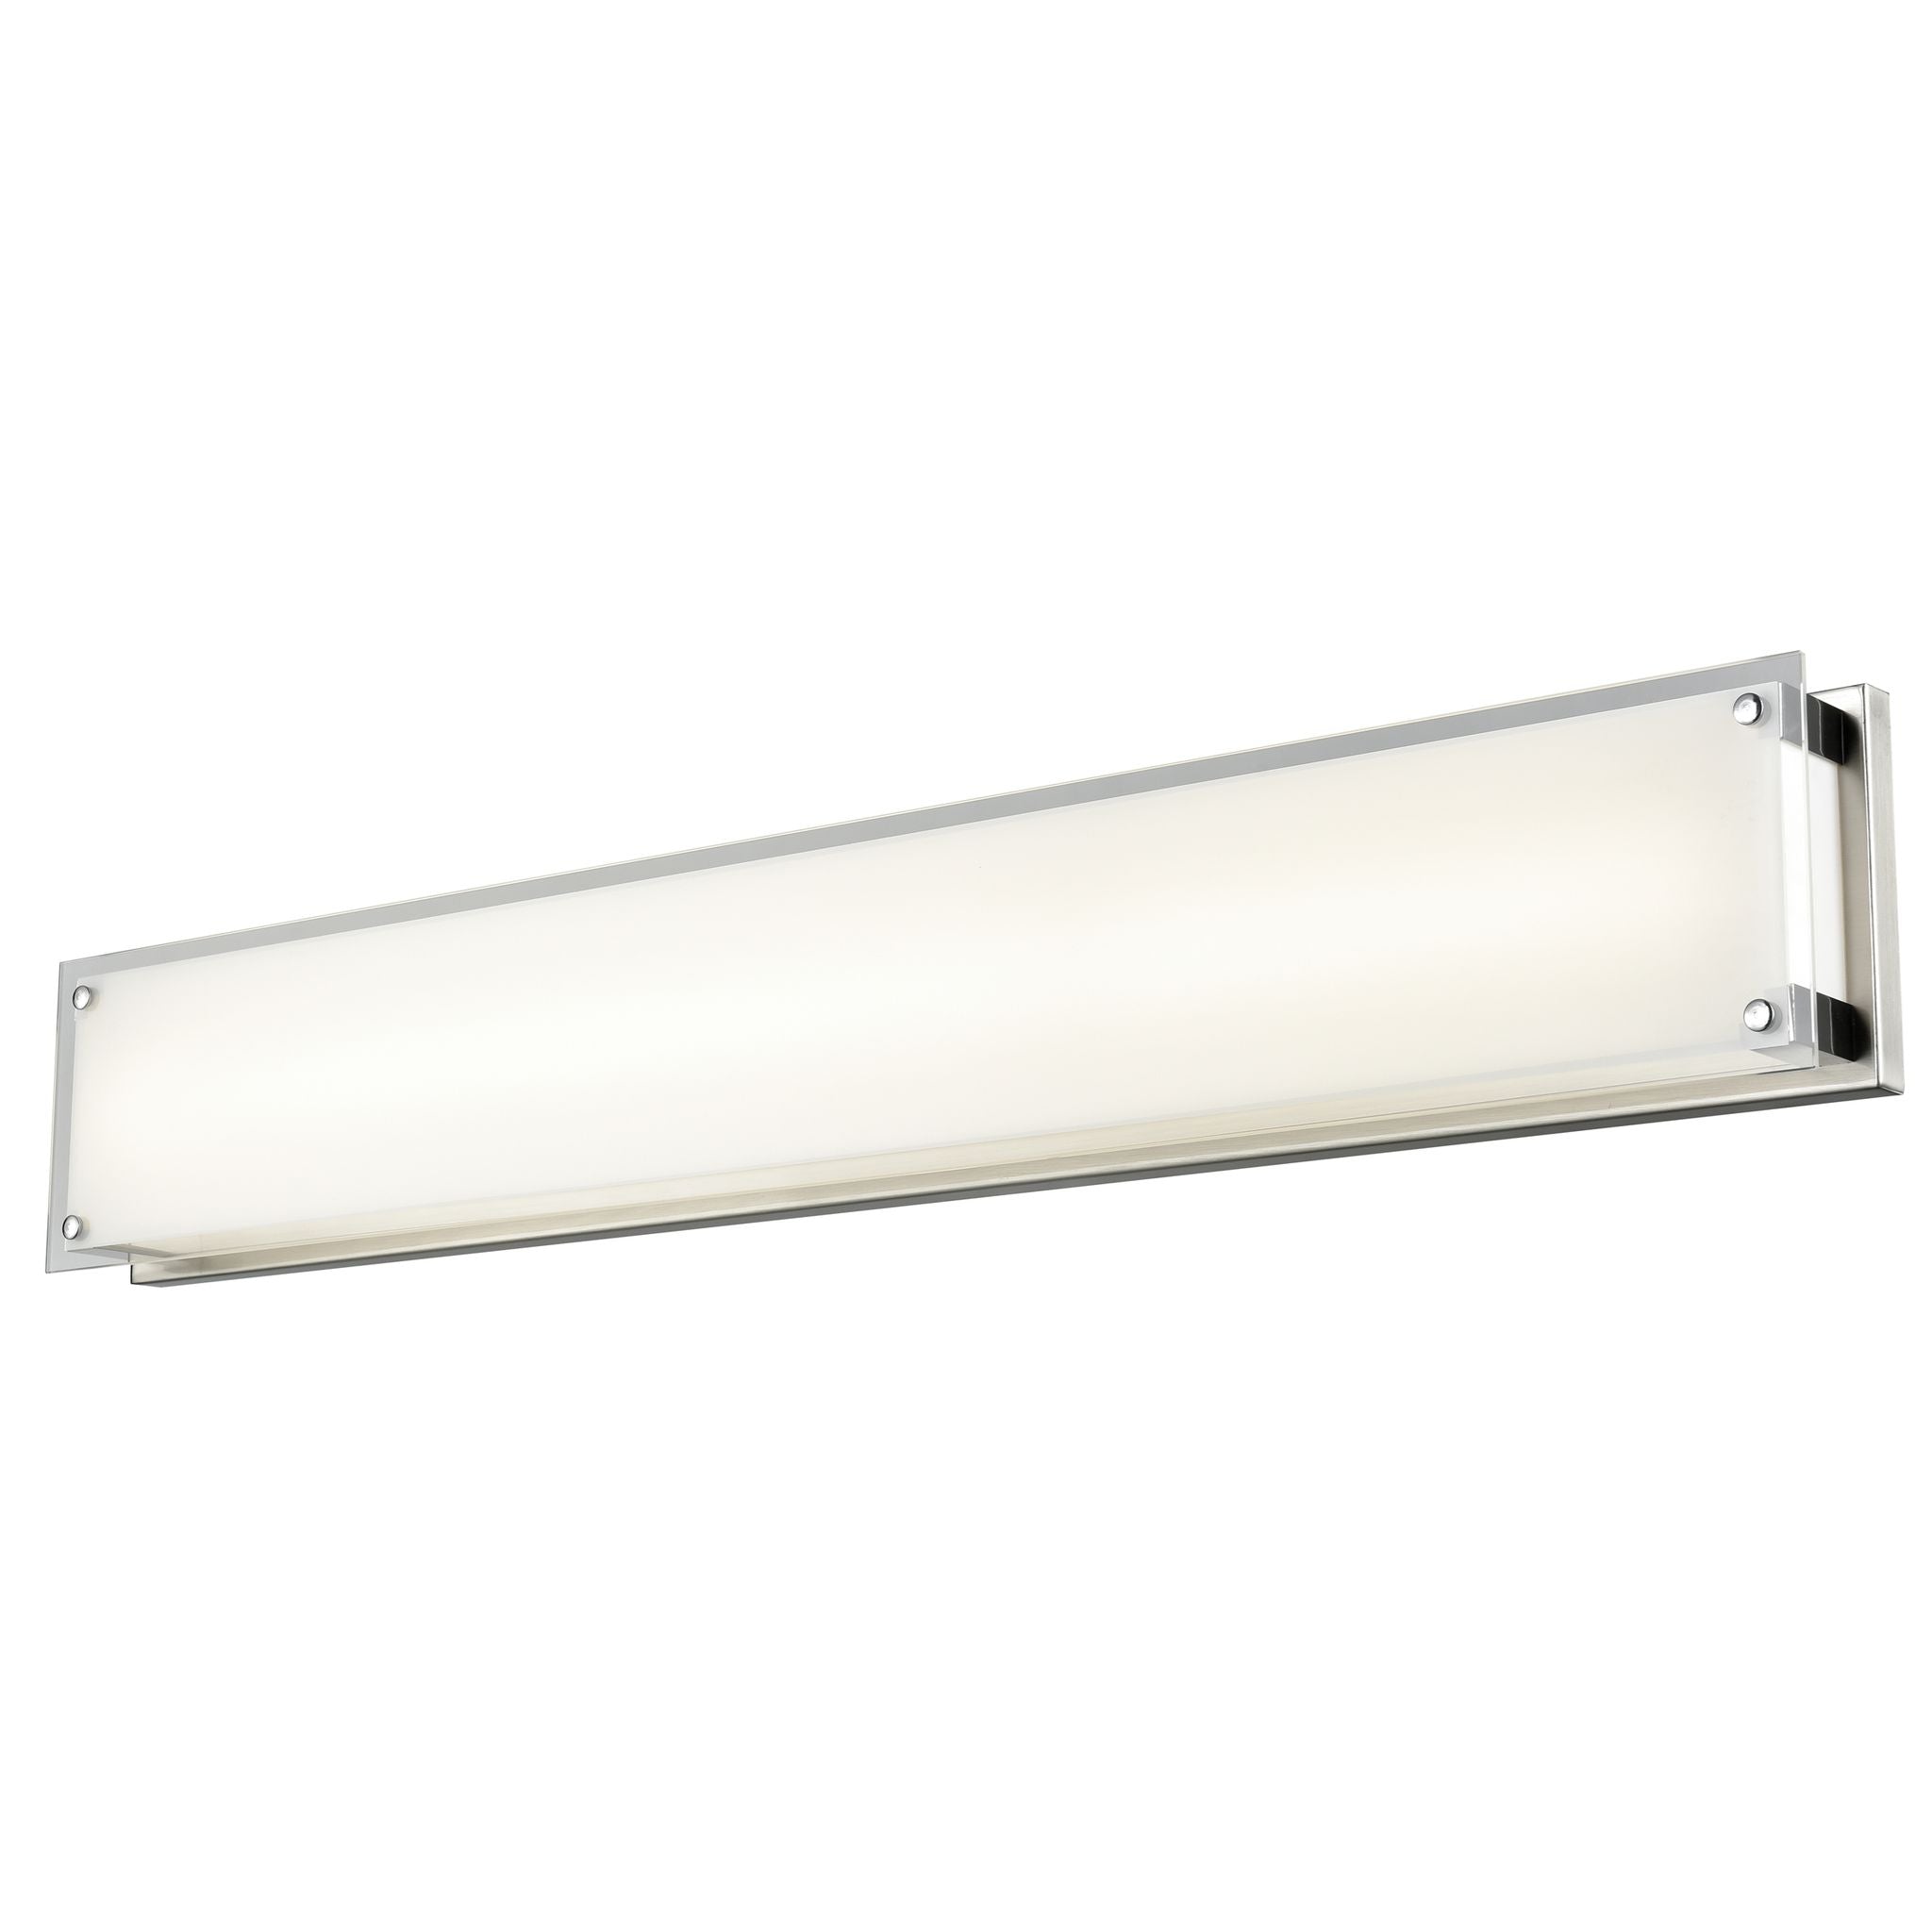 Helios AC LED Bathroom sconce Stainless steel INTEGRATED LED - DVP10394BN-SSW | DVI